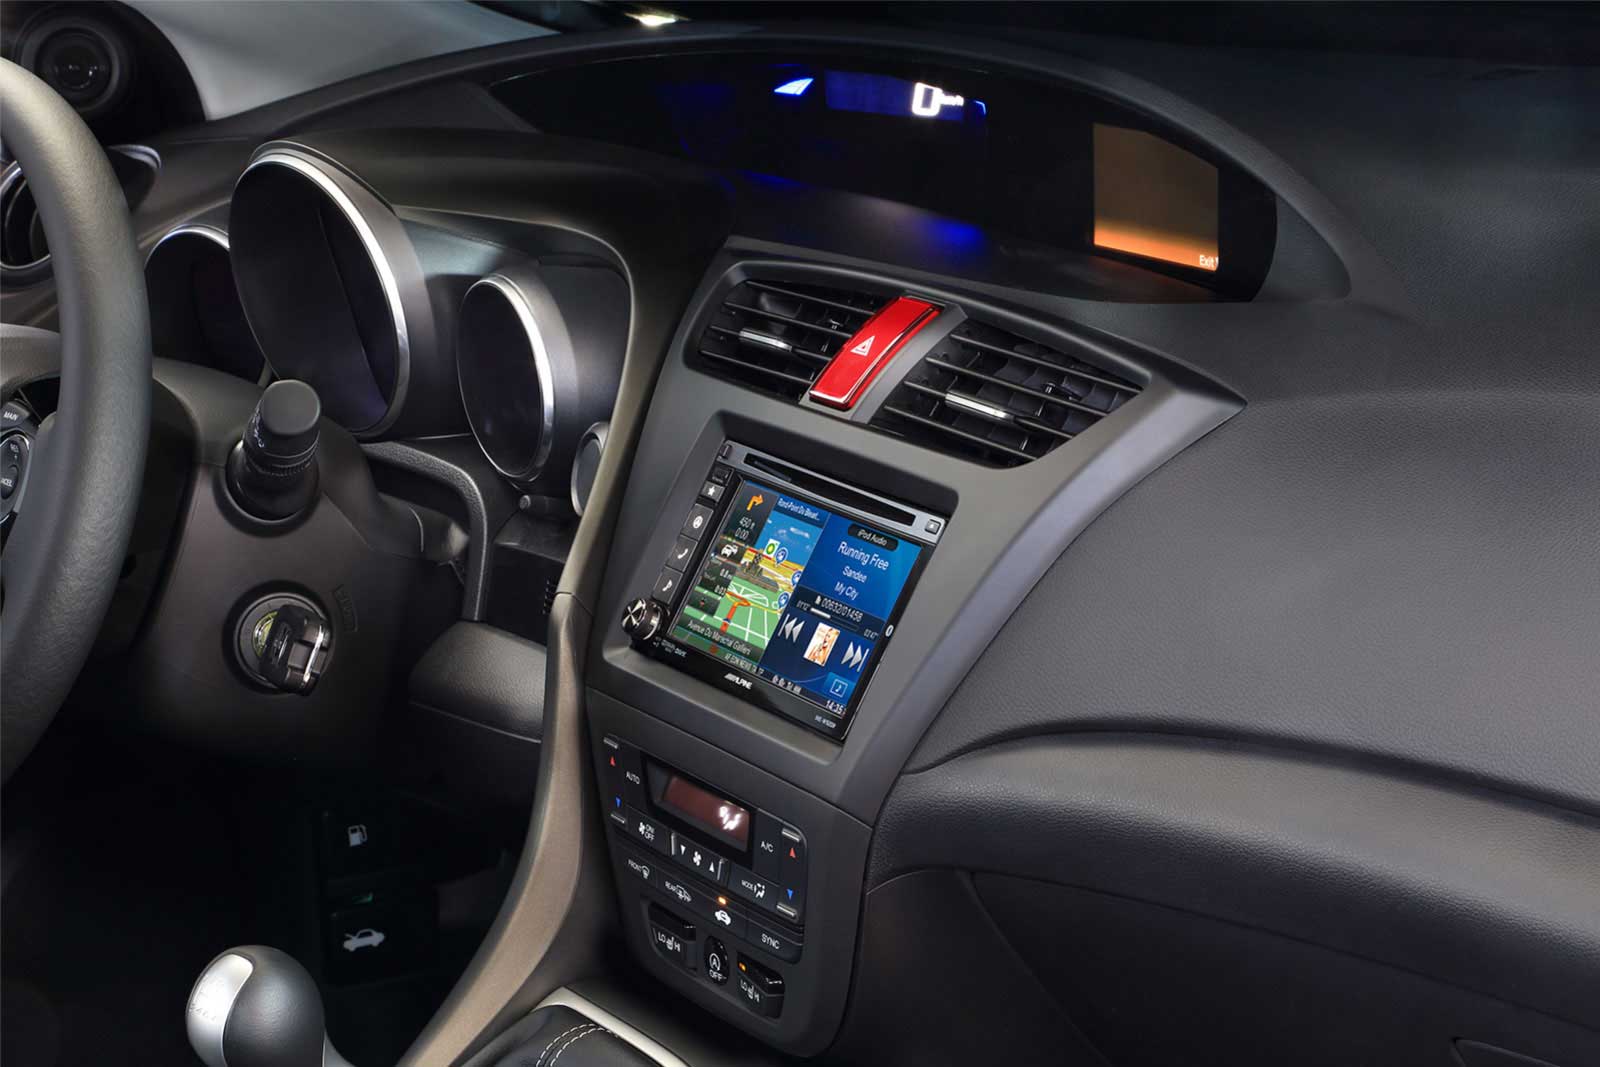 Radio-Rahmen ISO anthrazit Honda Civic 03>06  Artikelnummer 03298 